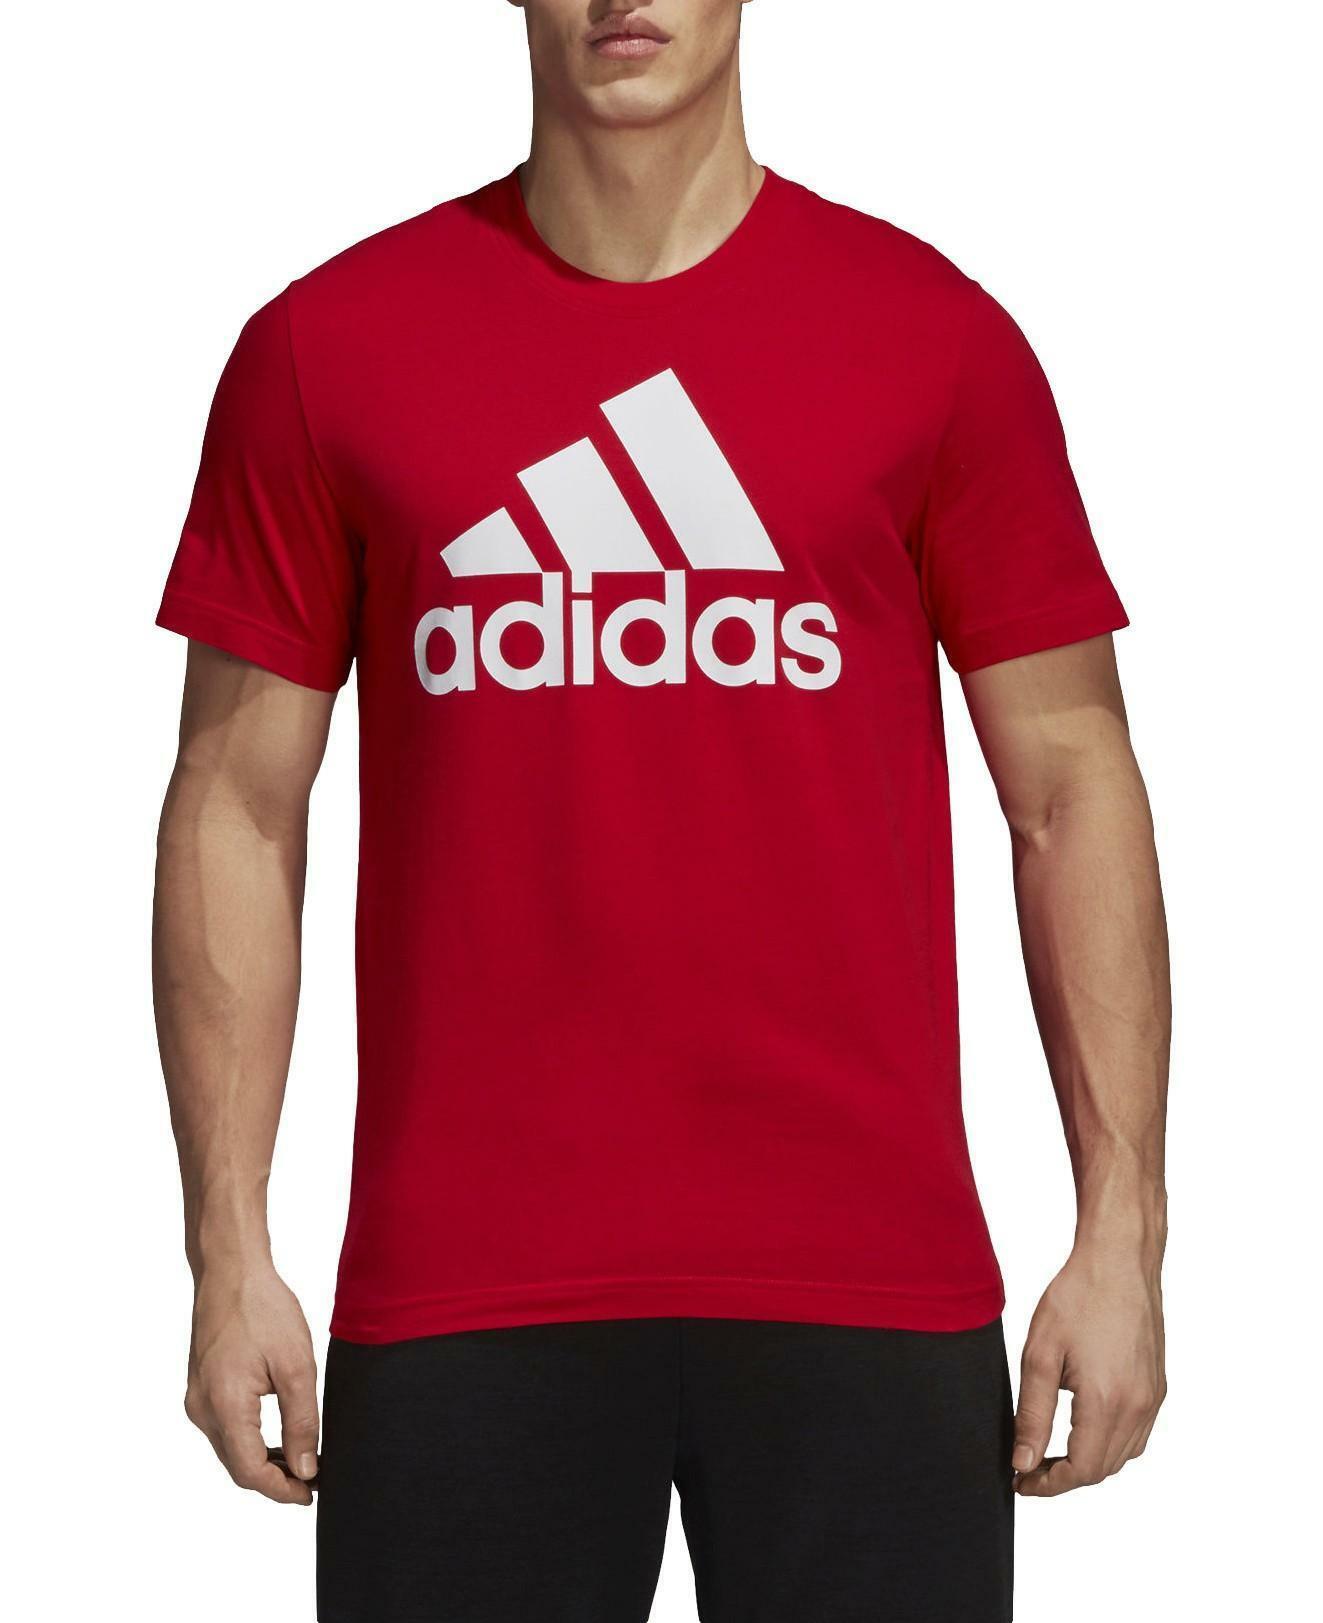 adidas adidas linear tee t-shirt uomo rossa cz7509